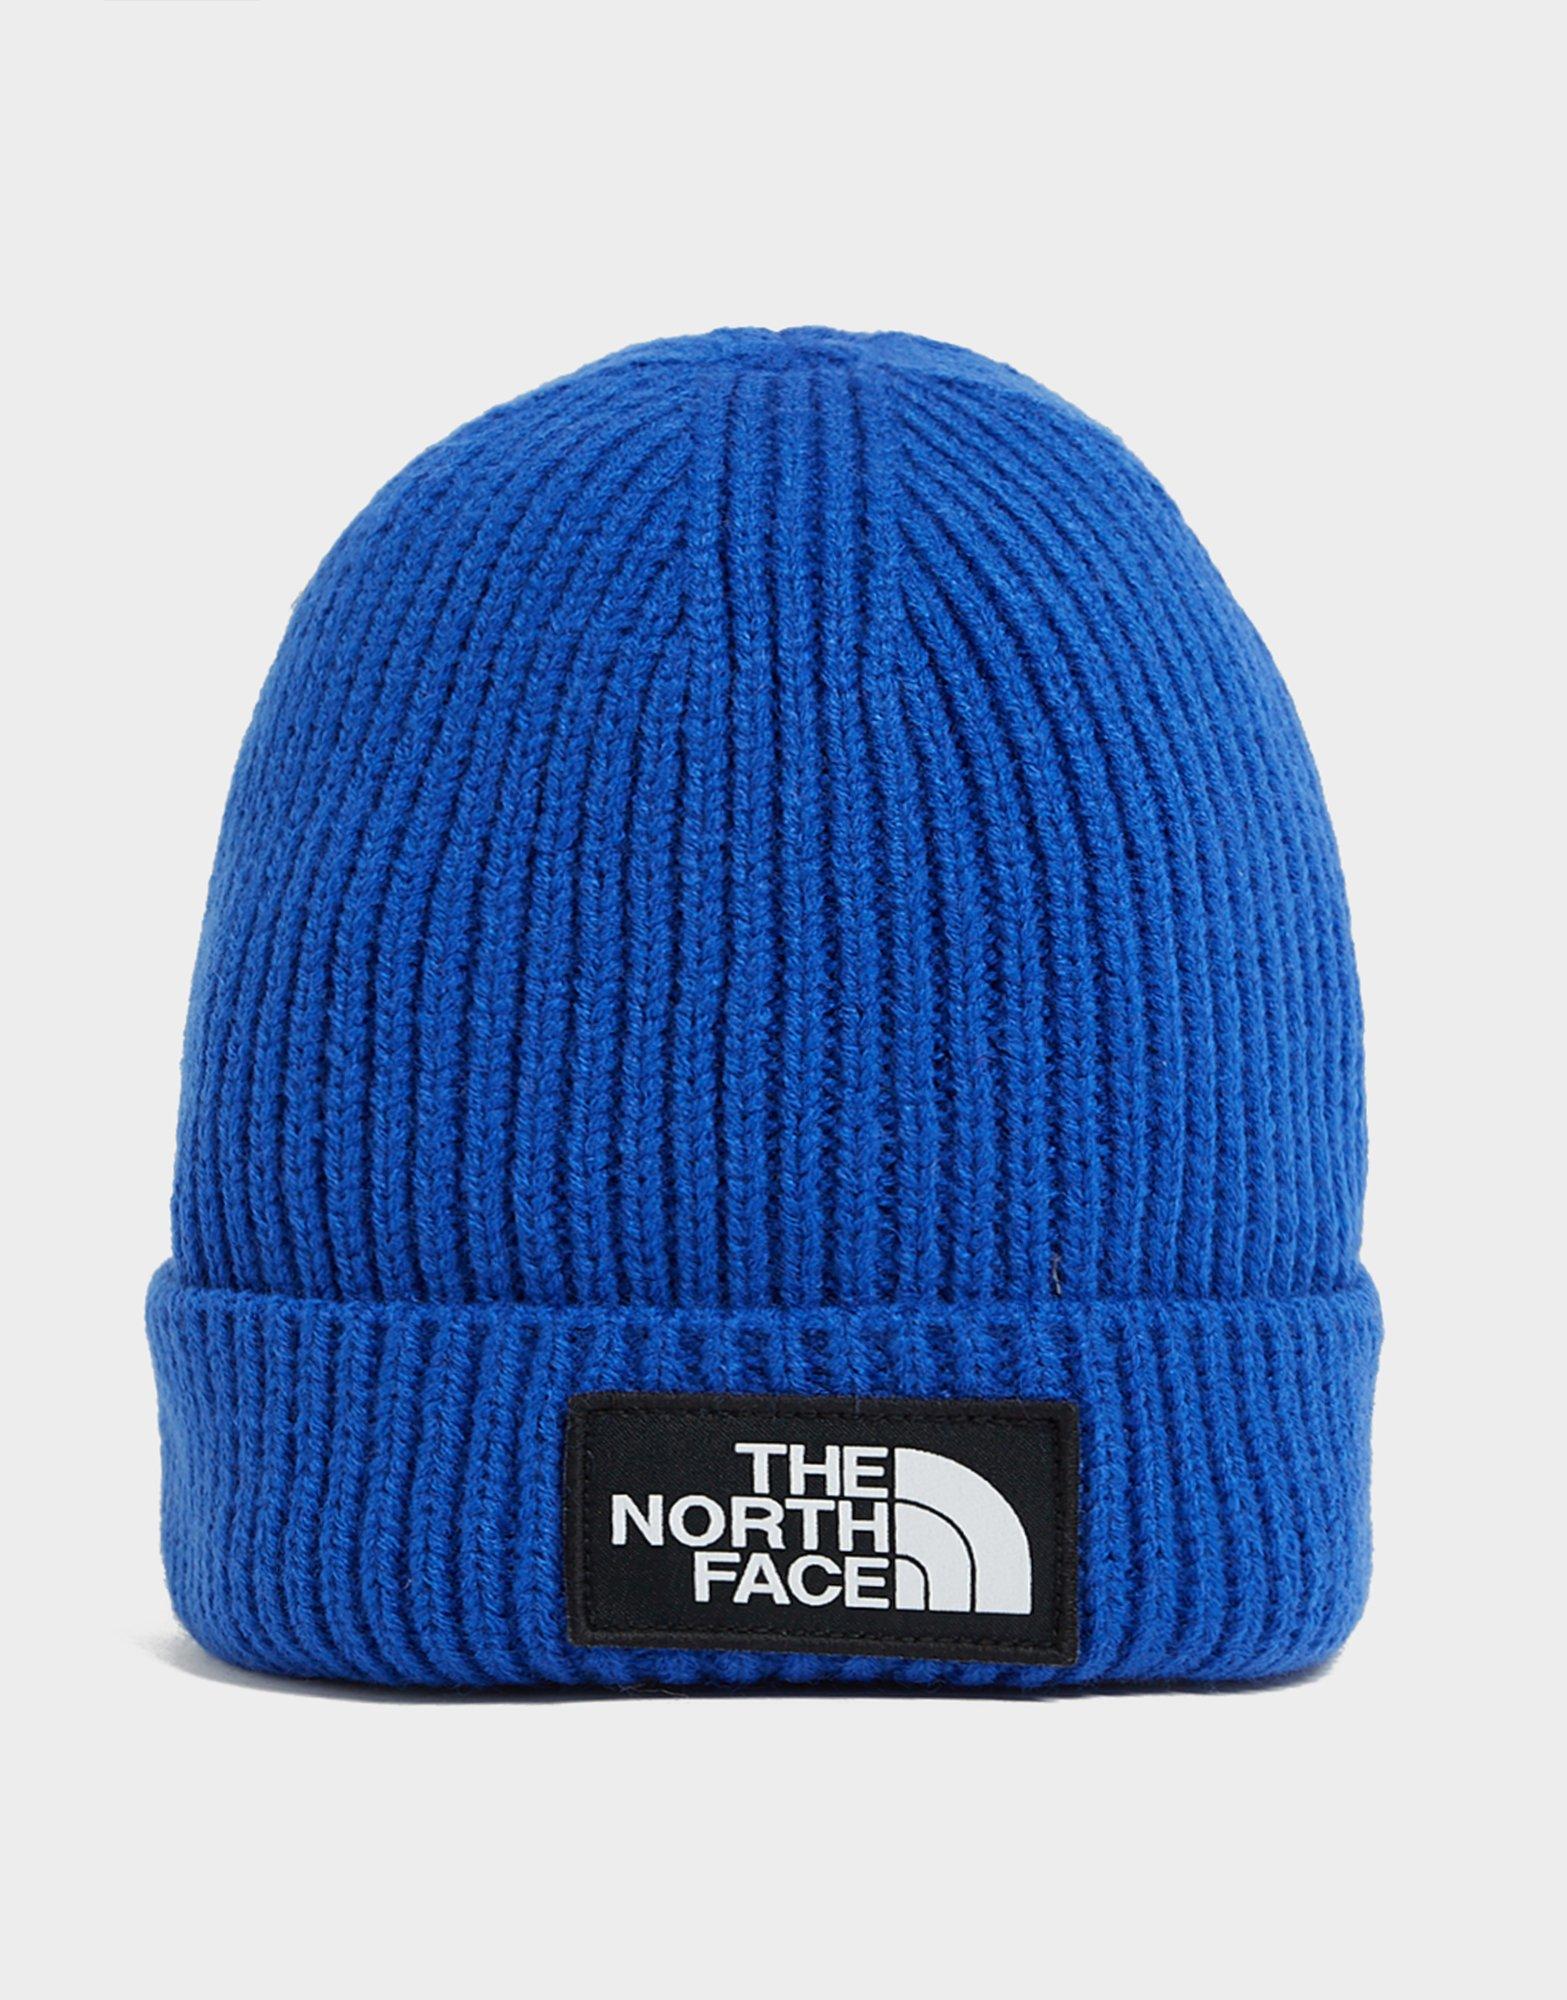 north face blue beanie hat